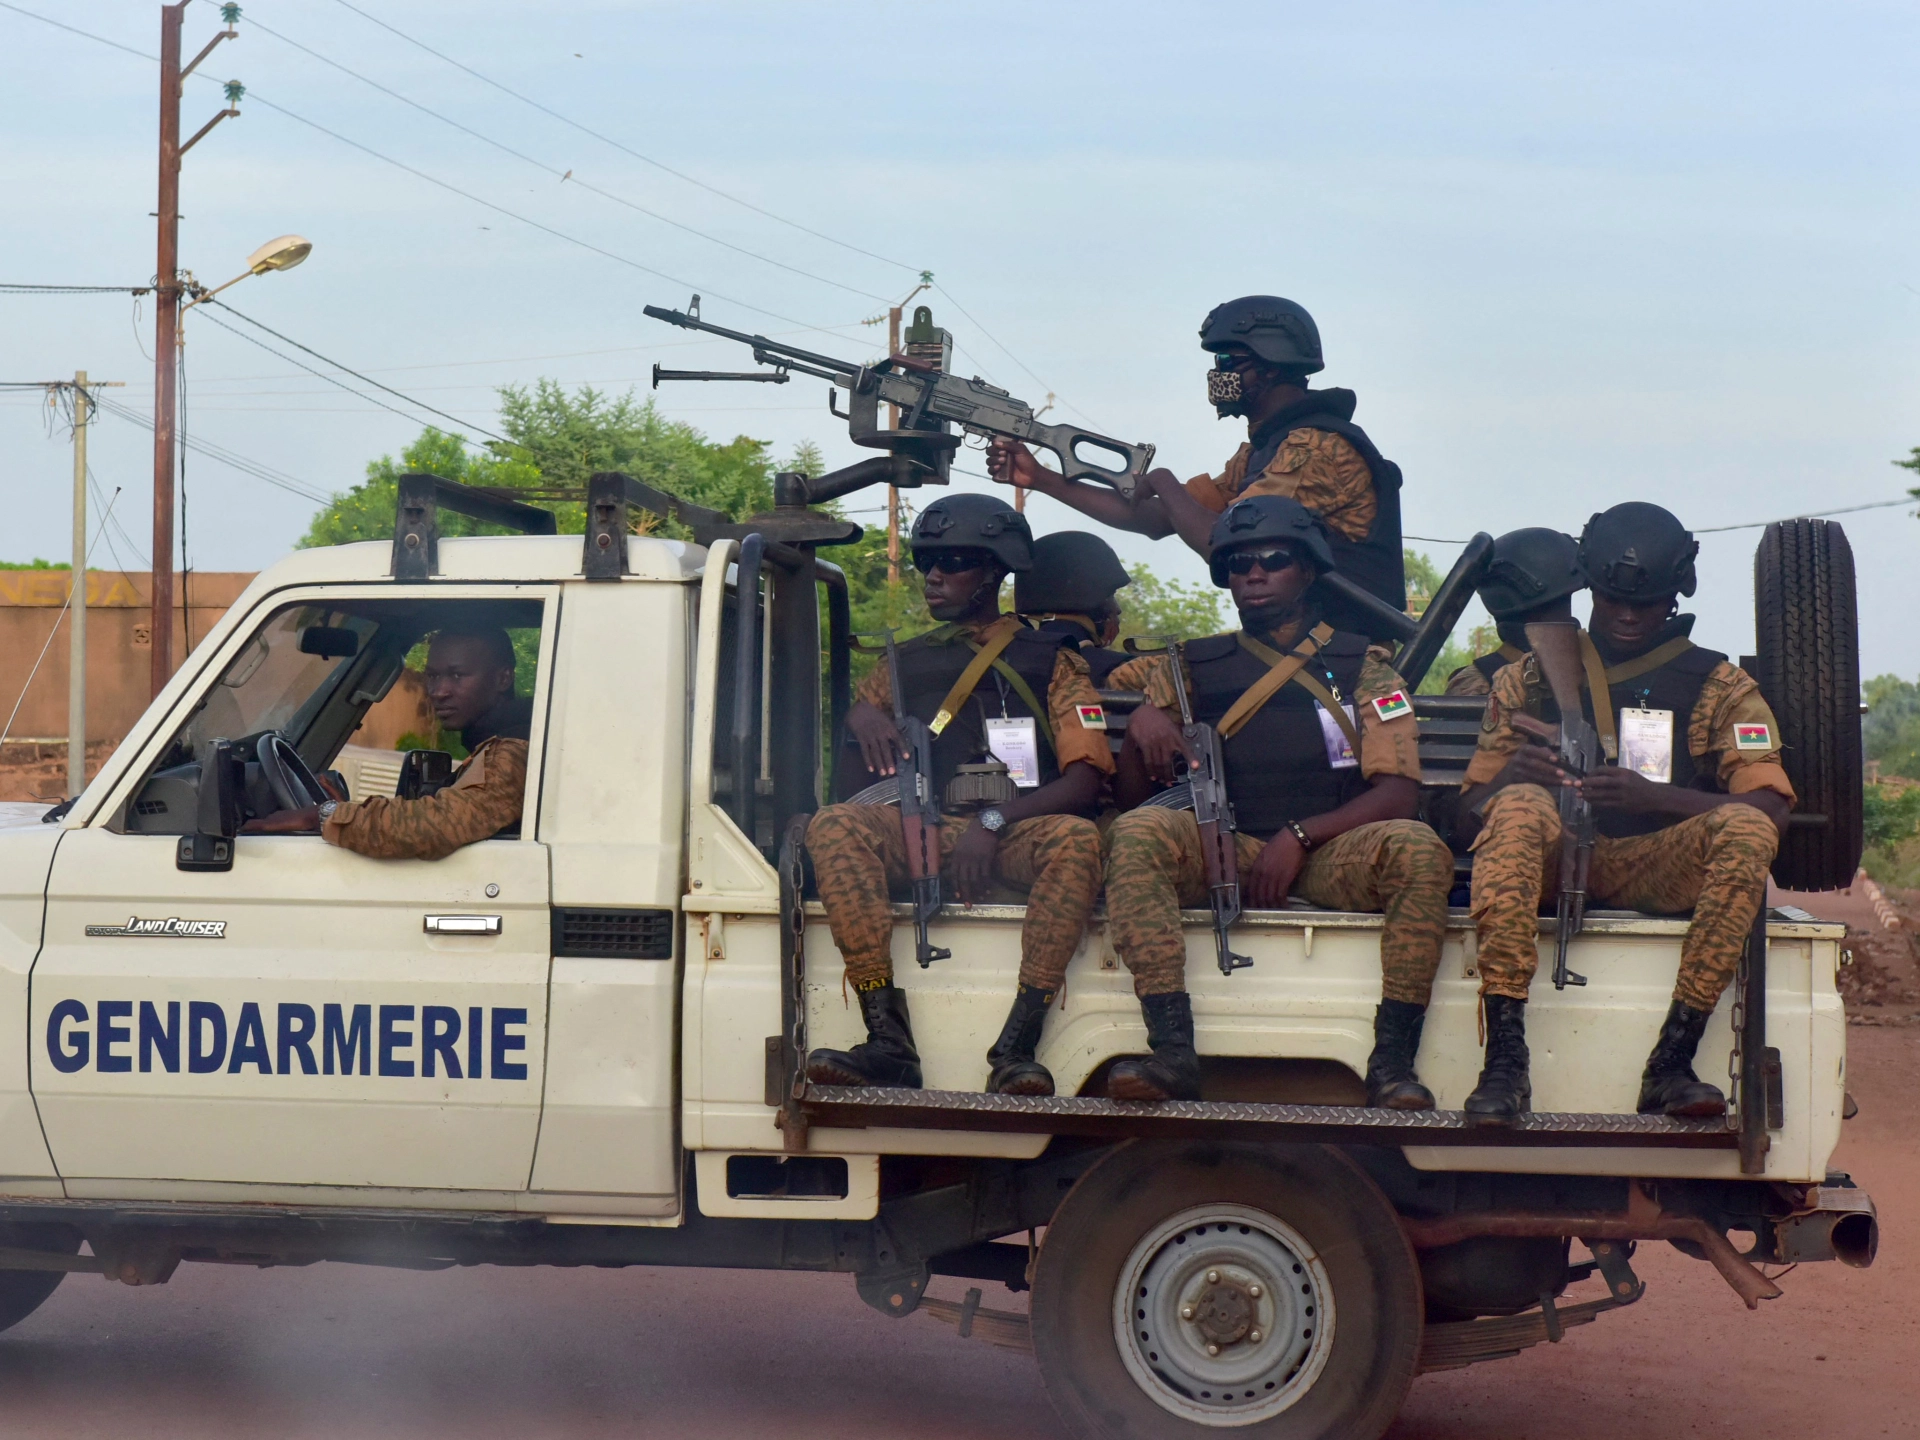 Terrorist Attack Kills Several in Burkina Faso Village